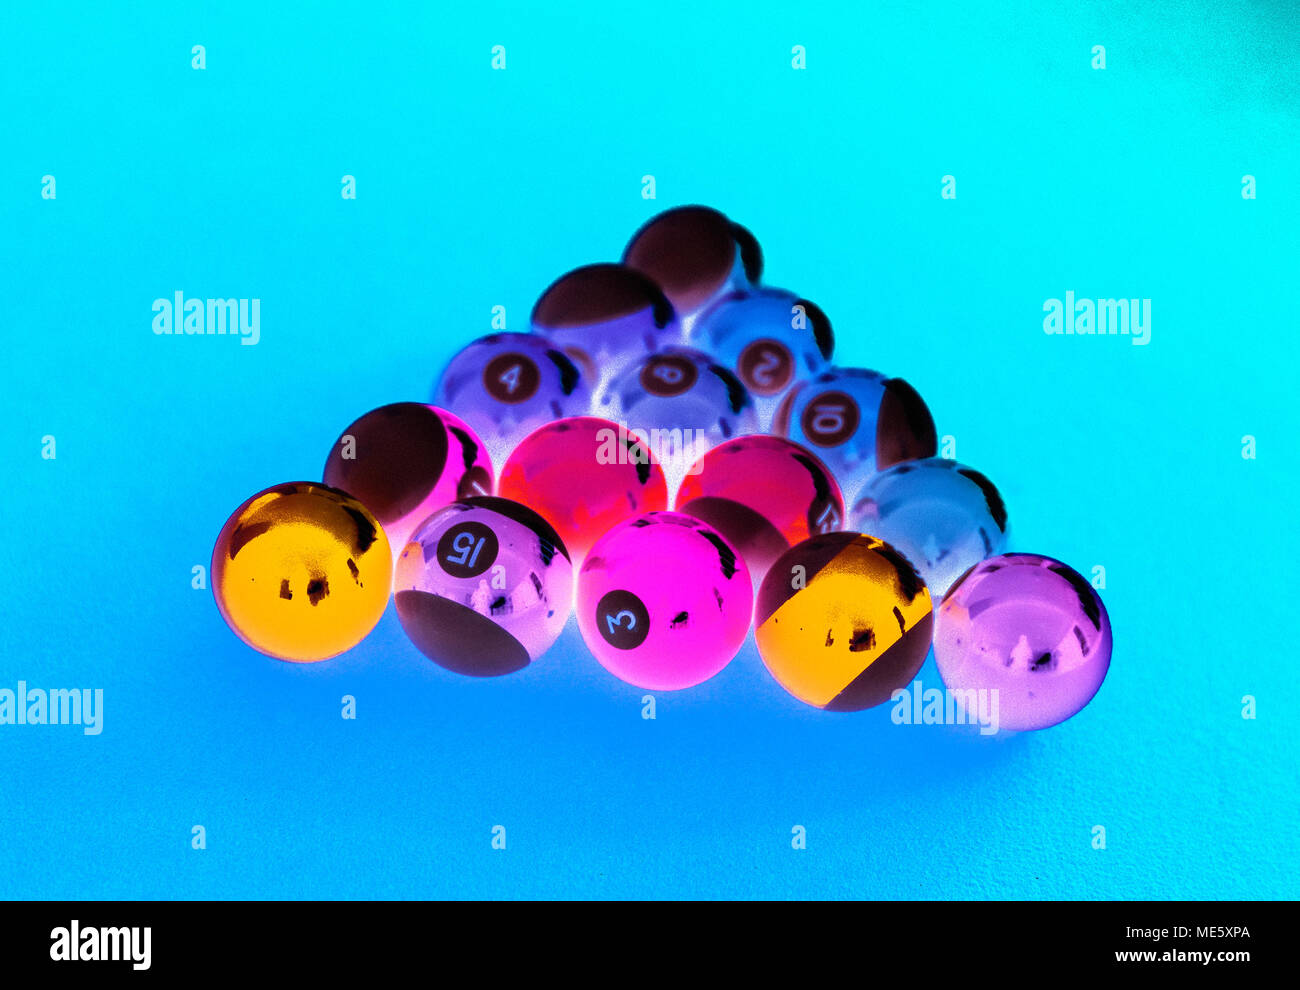 Billard balls setup on a pool table Stock Photo